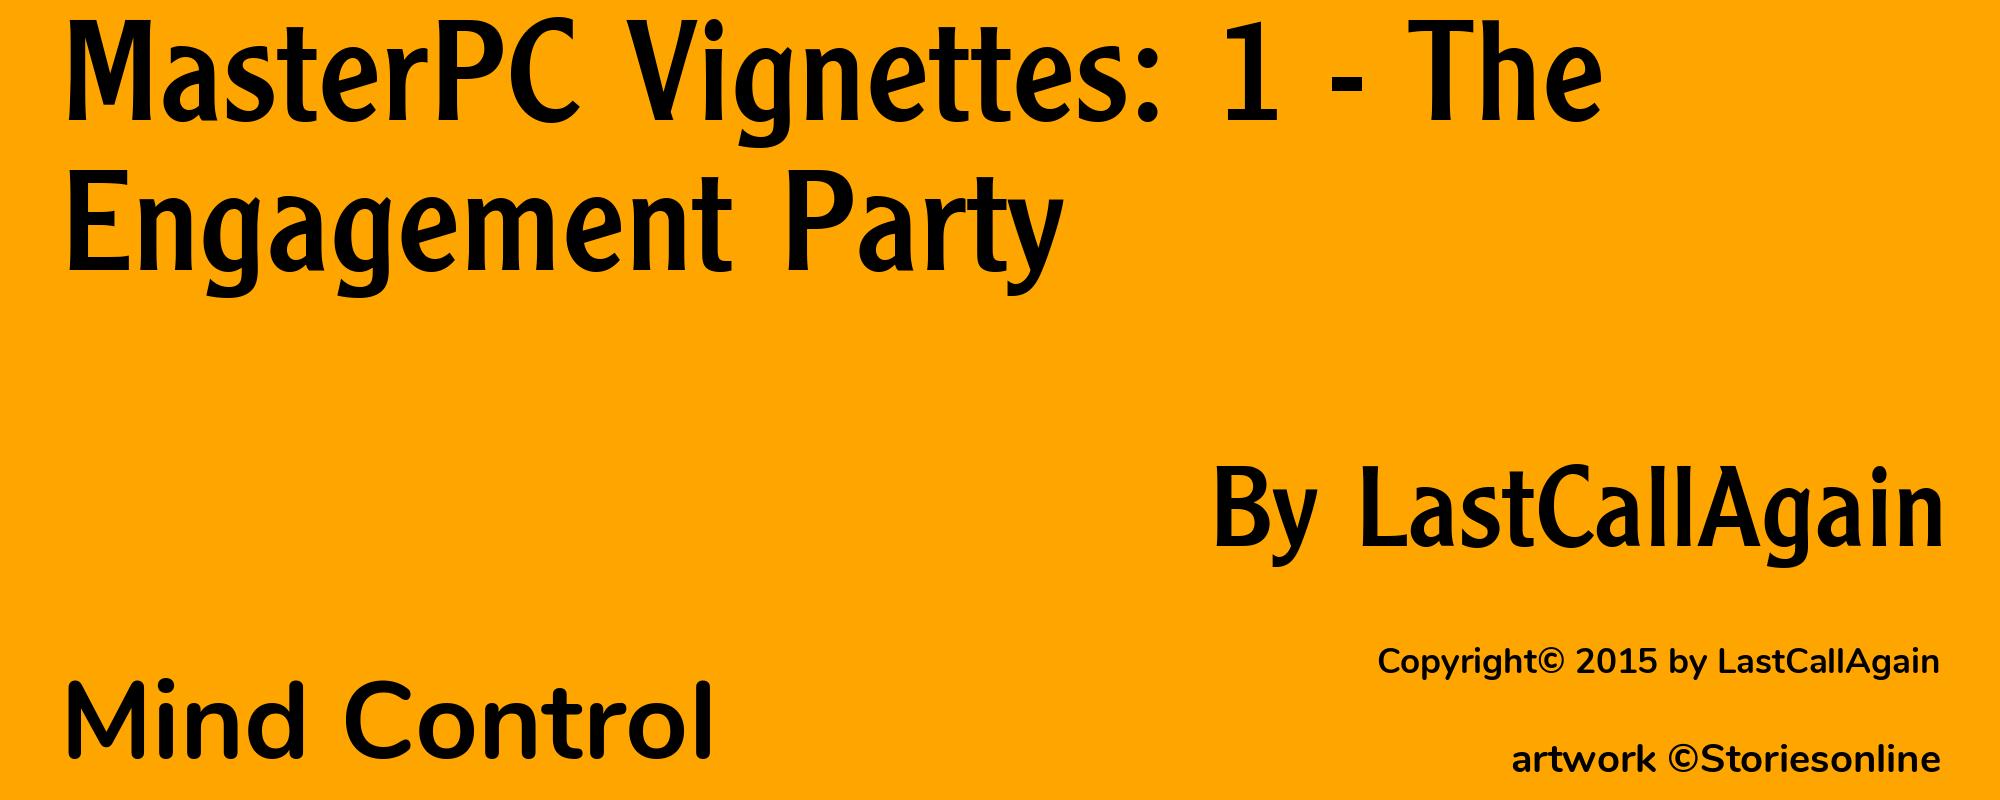 MasterPC Vignettes: 1 - The Engagement Party - Cover